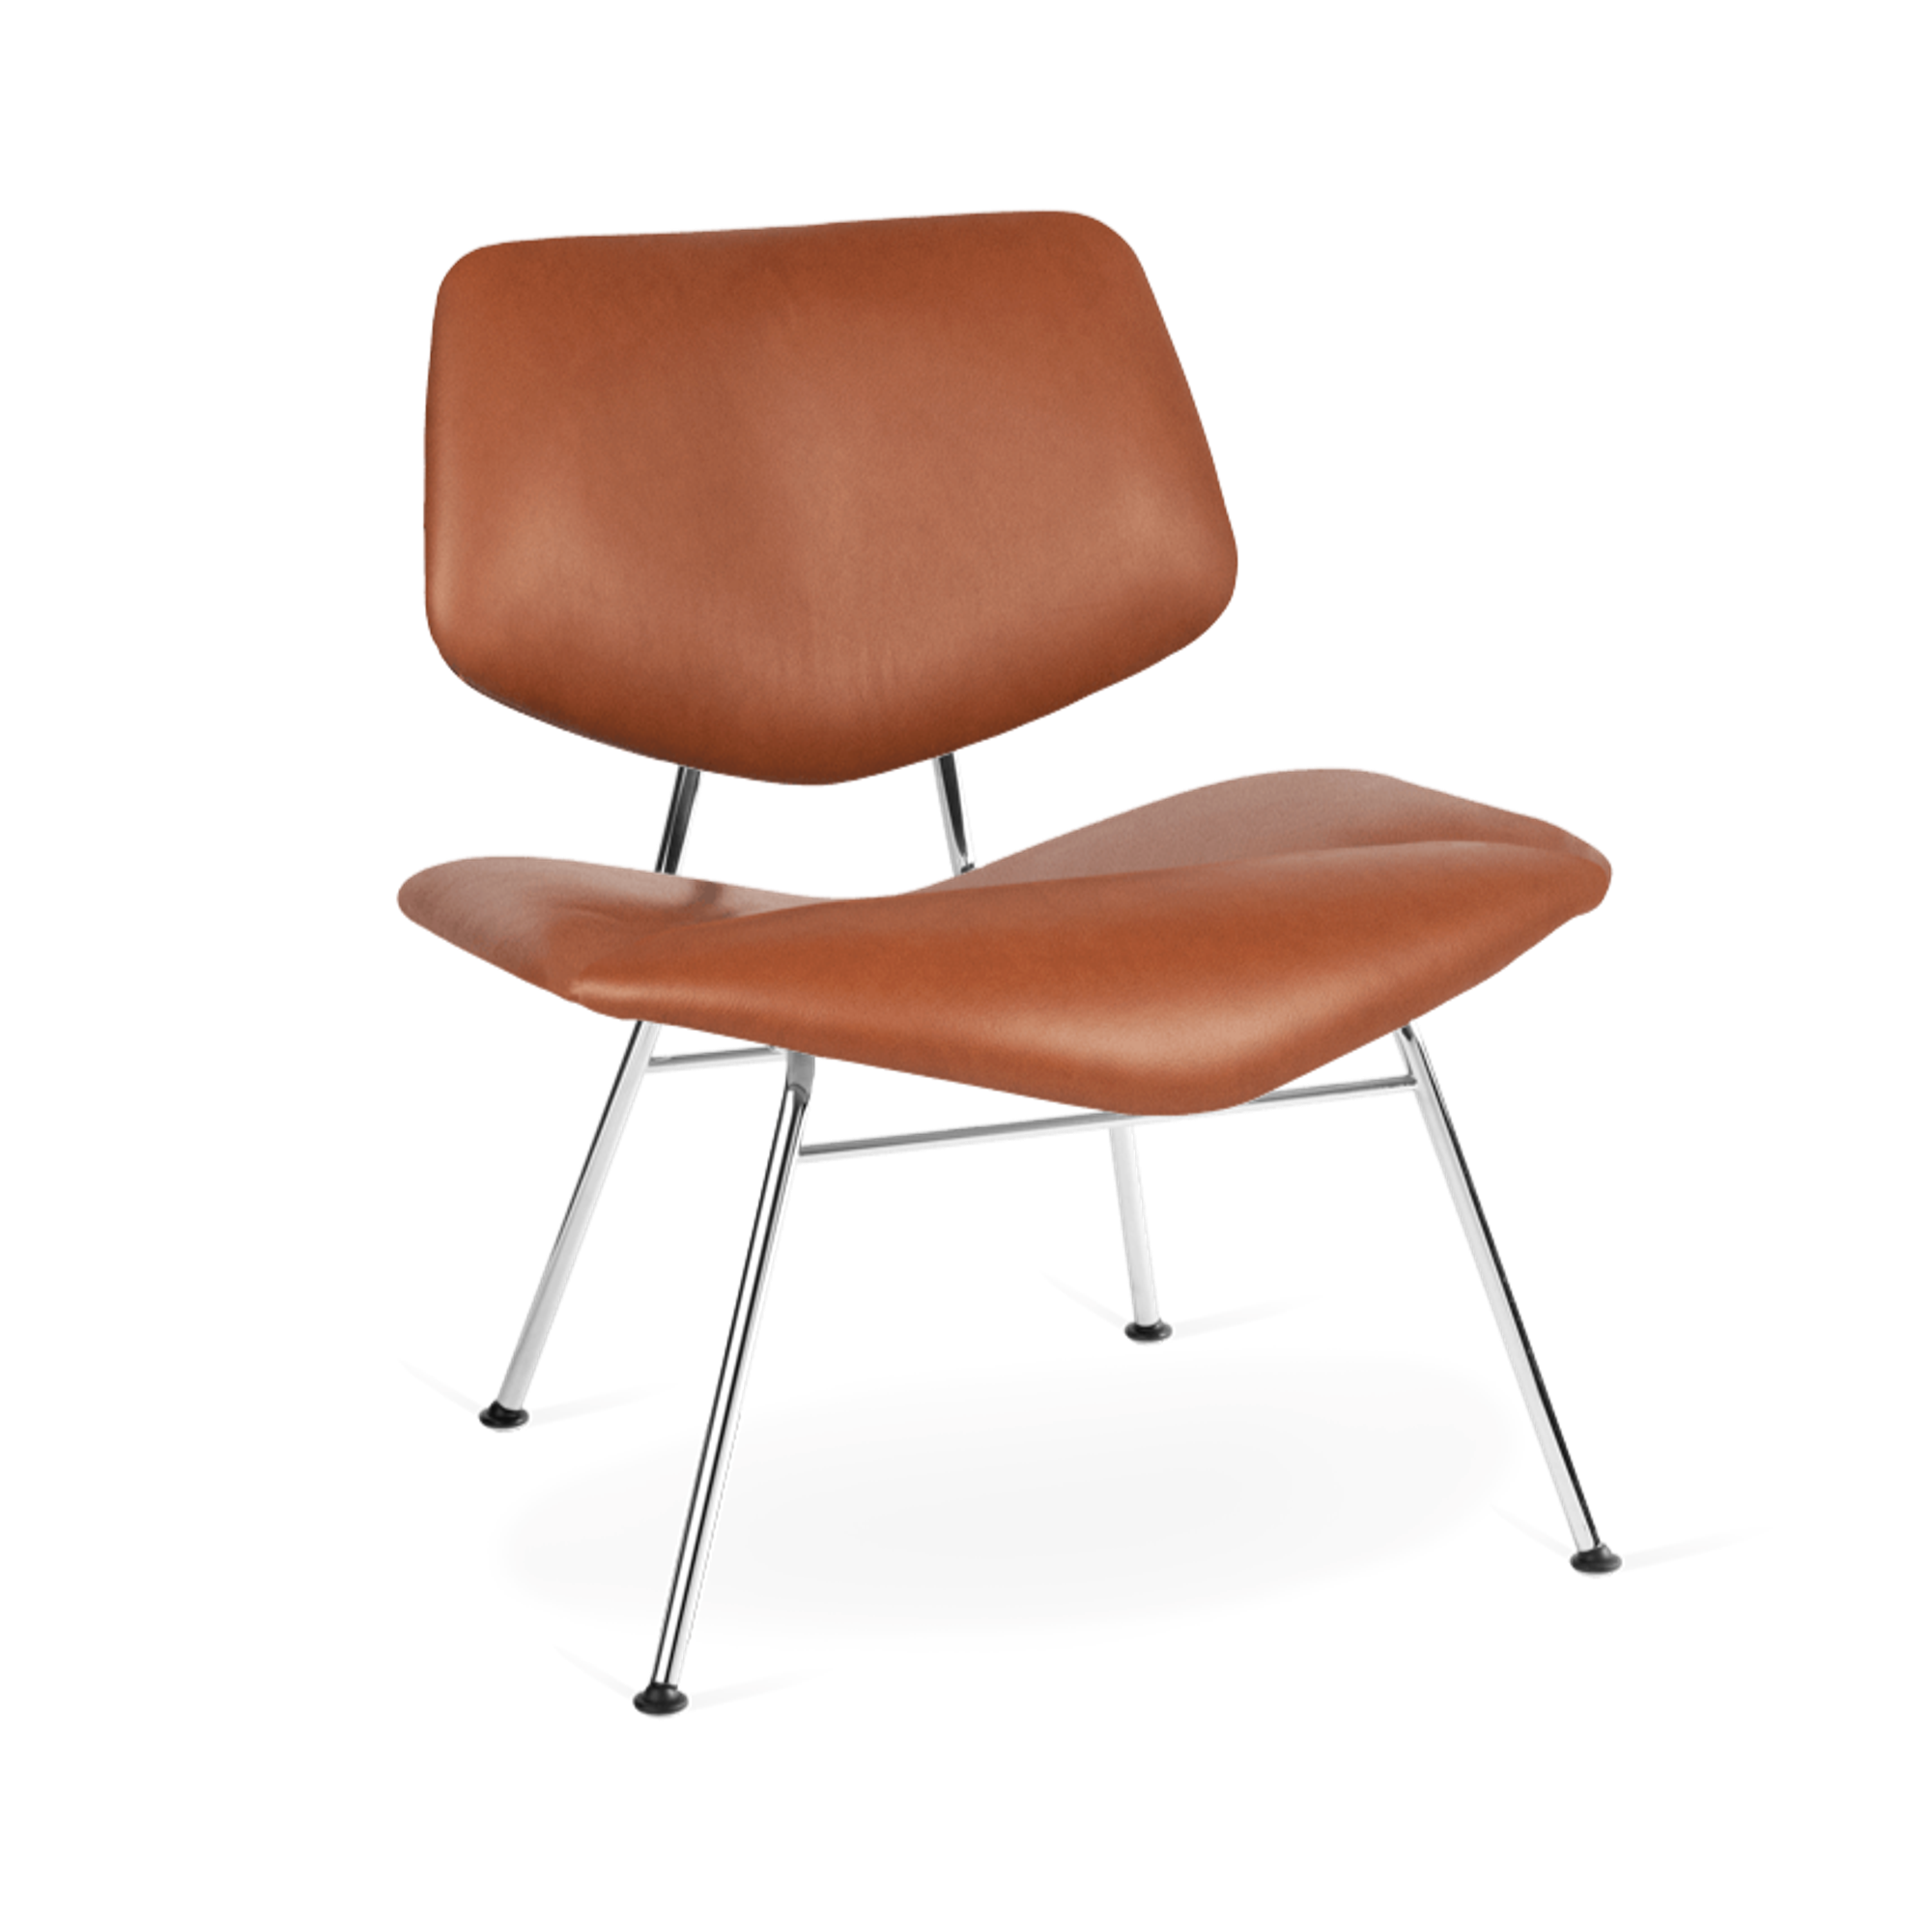 VERMUND VL135 Lounge Chair Sierra Cognac Leather/Chrome Frame